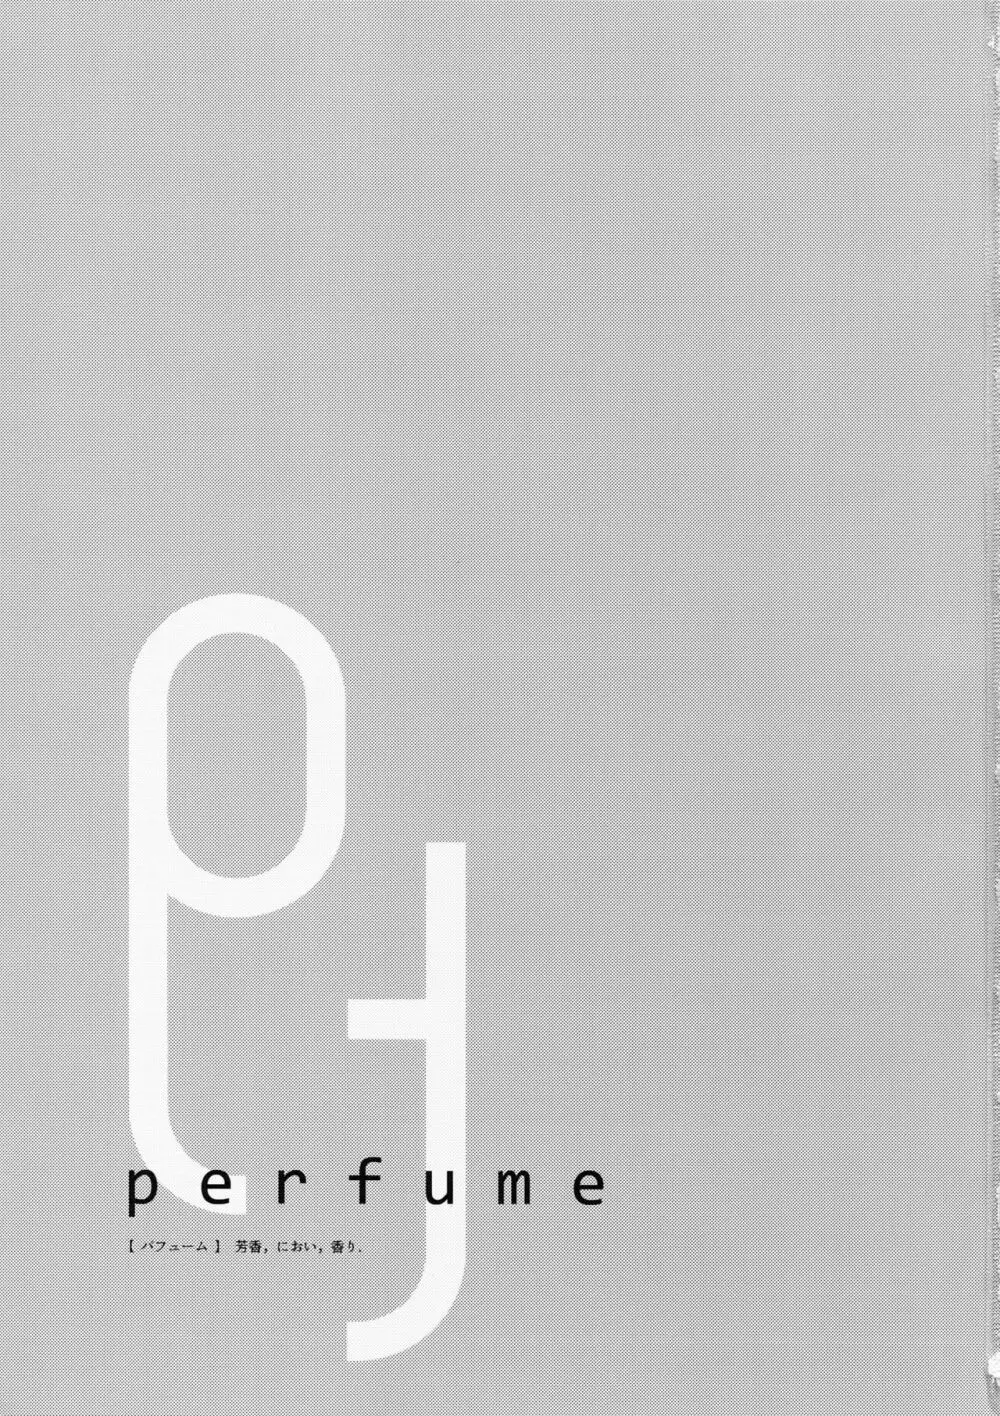 perfume - page2